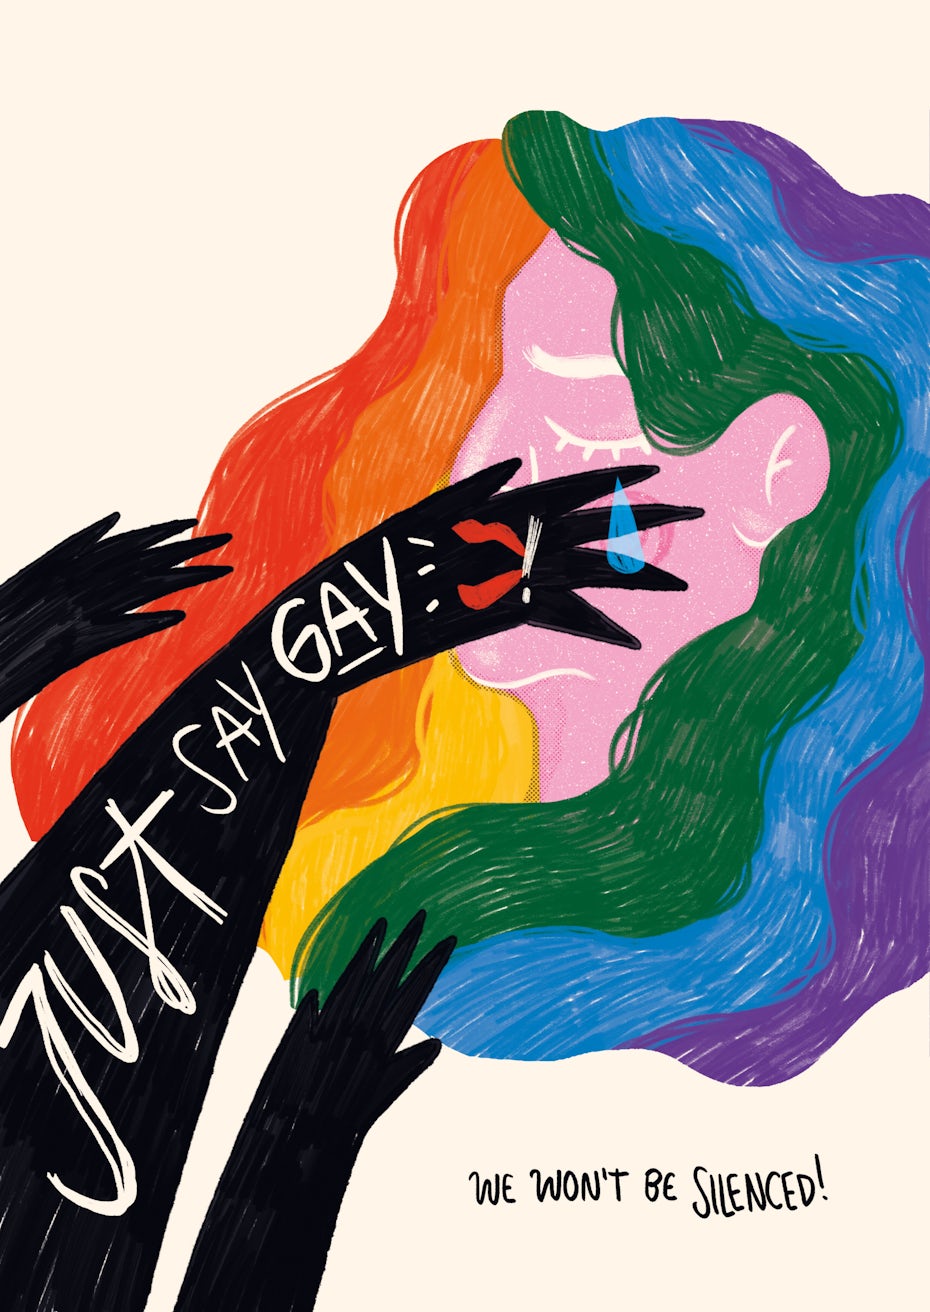 LGBTQA+ rainbow poster